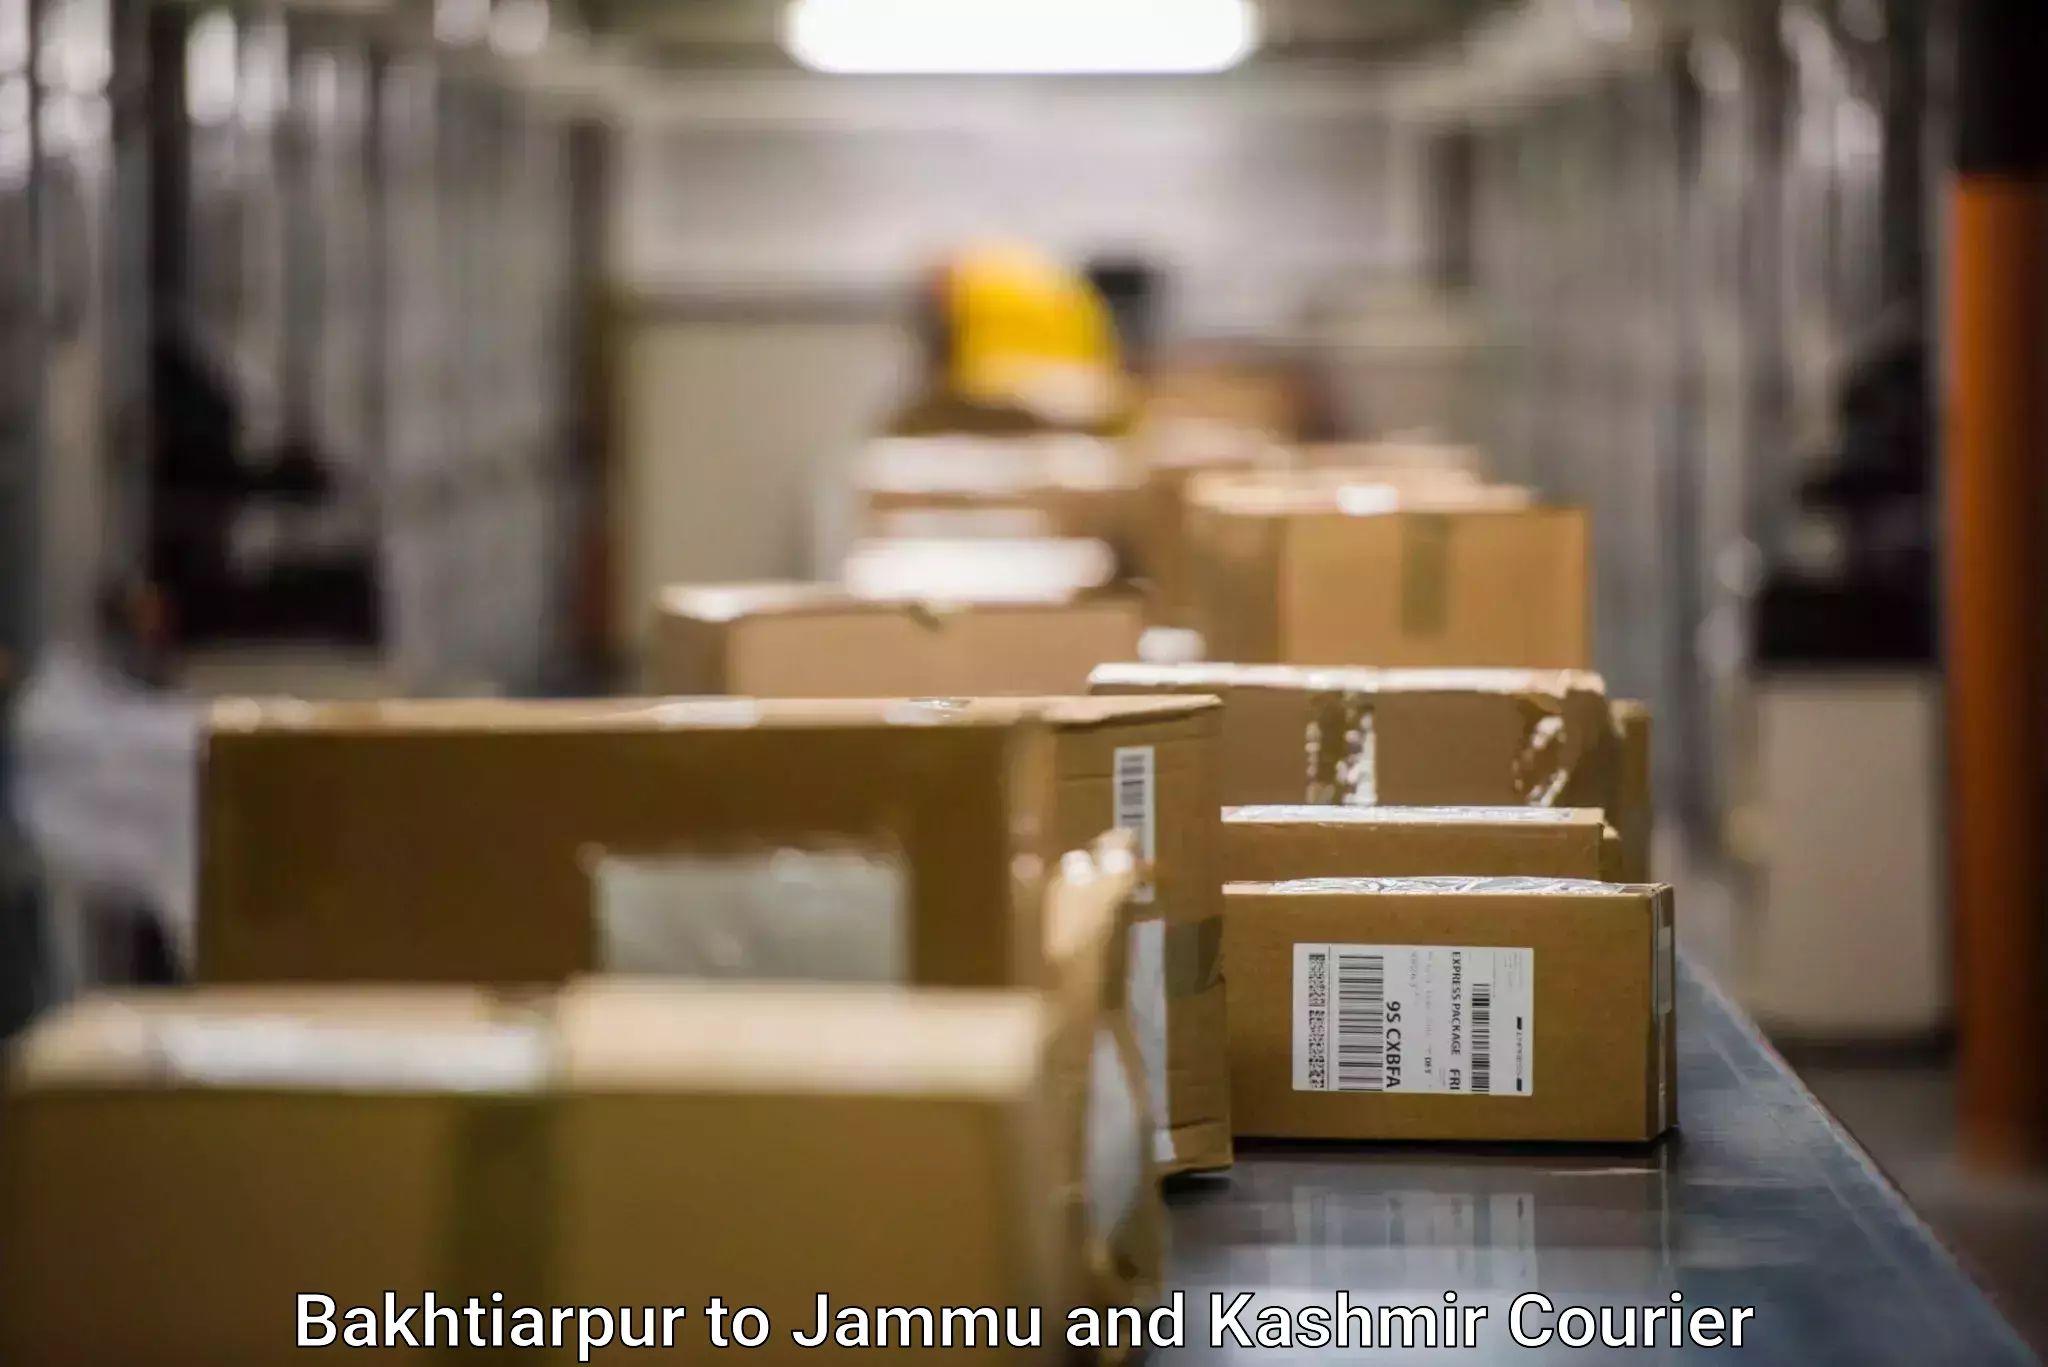 Expedited shipping methods Bakhtiarpur to Jammu and Kashmir